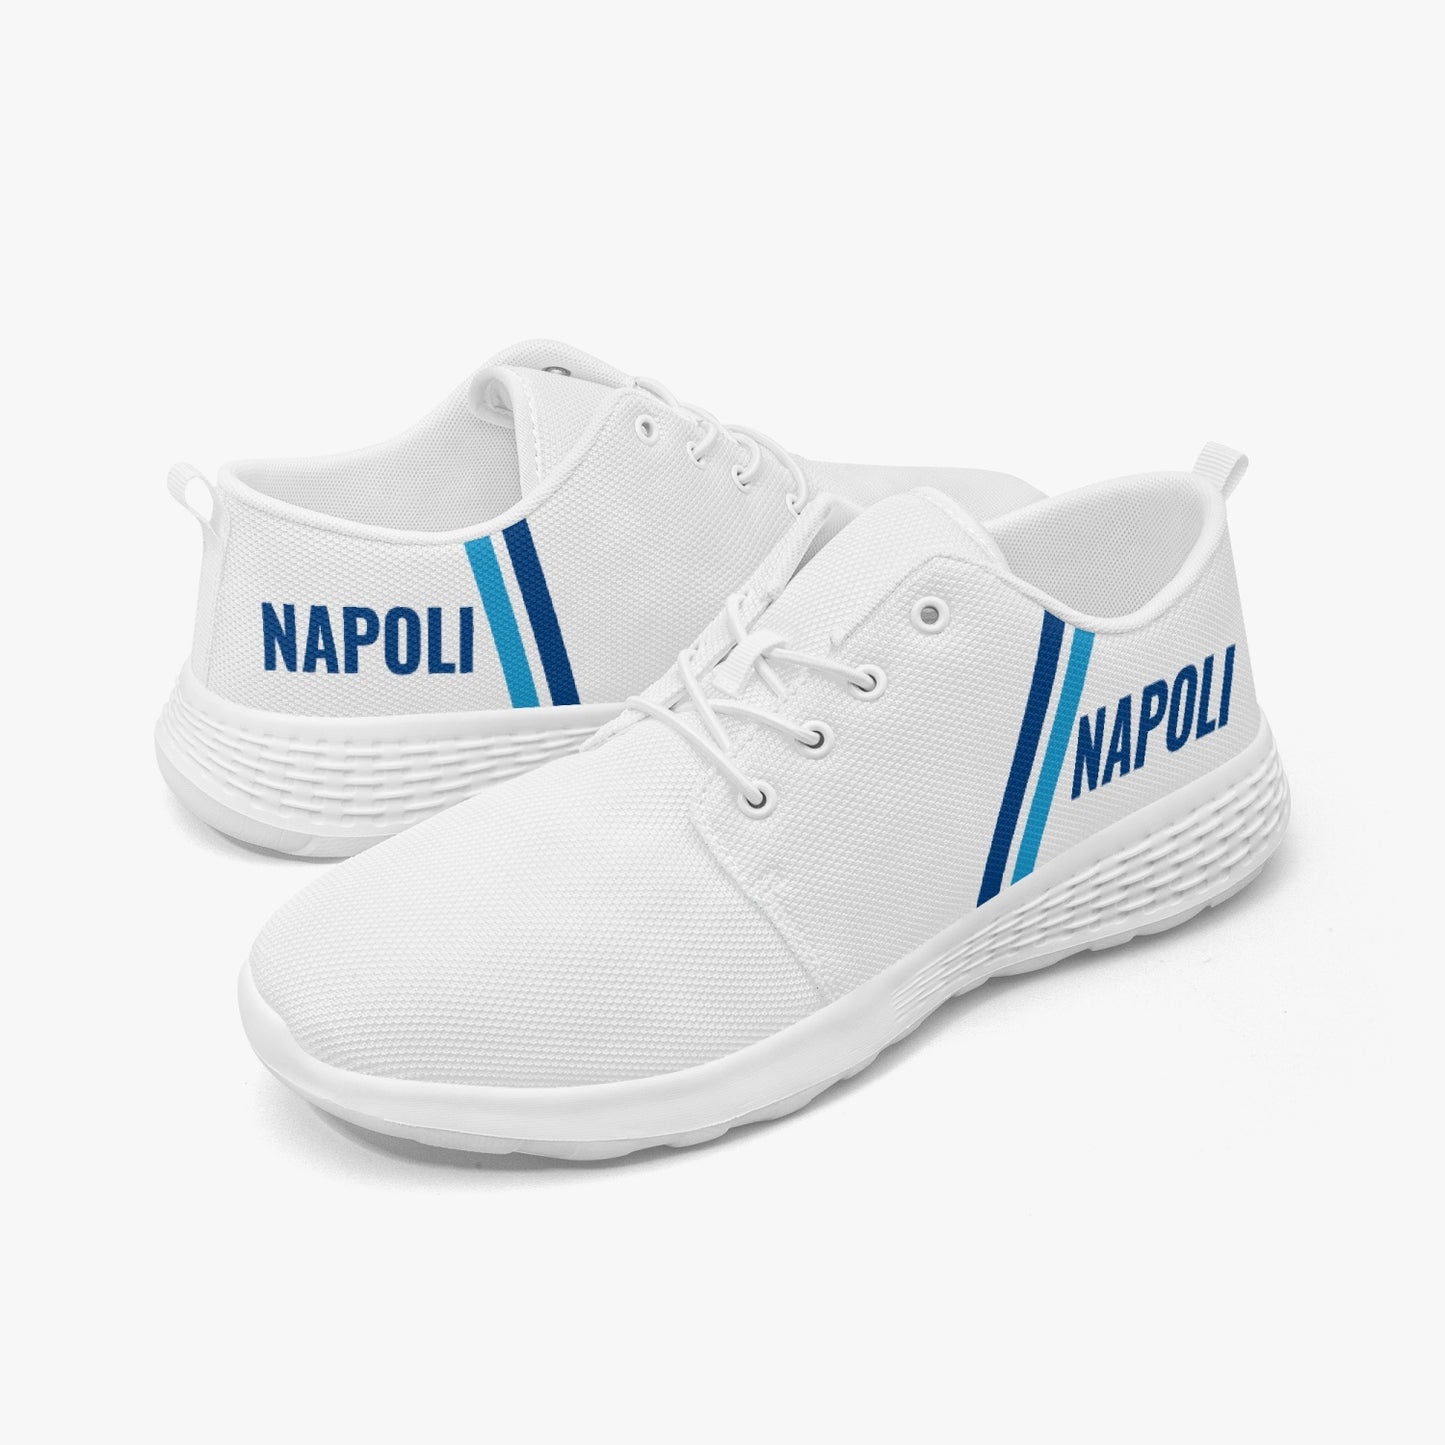 Napoli Running Shoes - men's /women's sizes